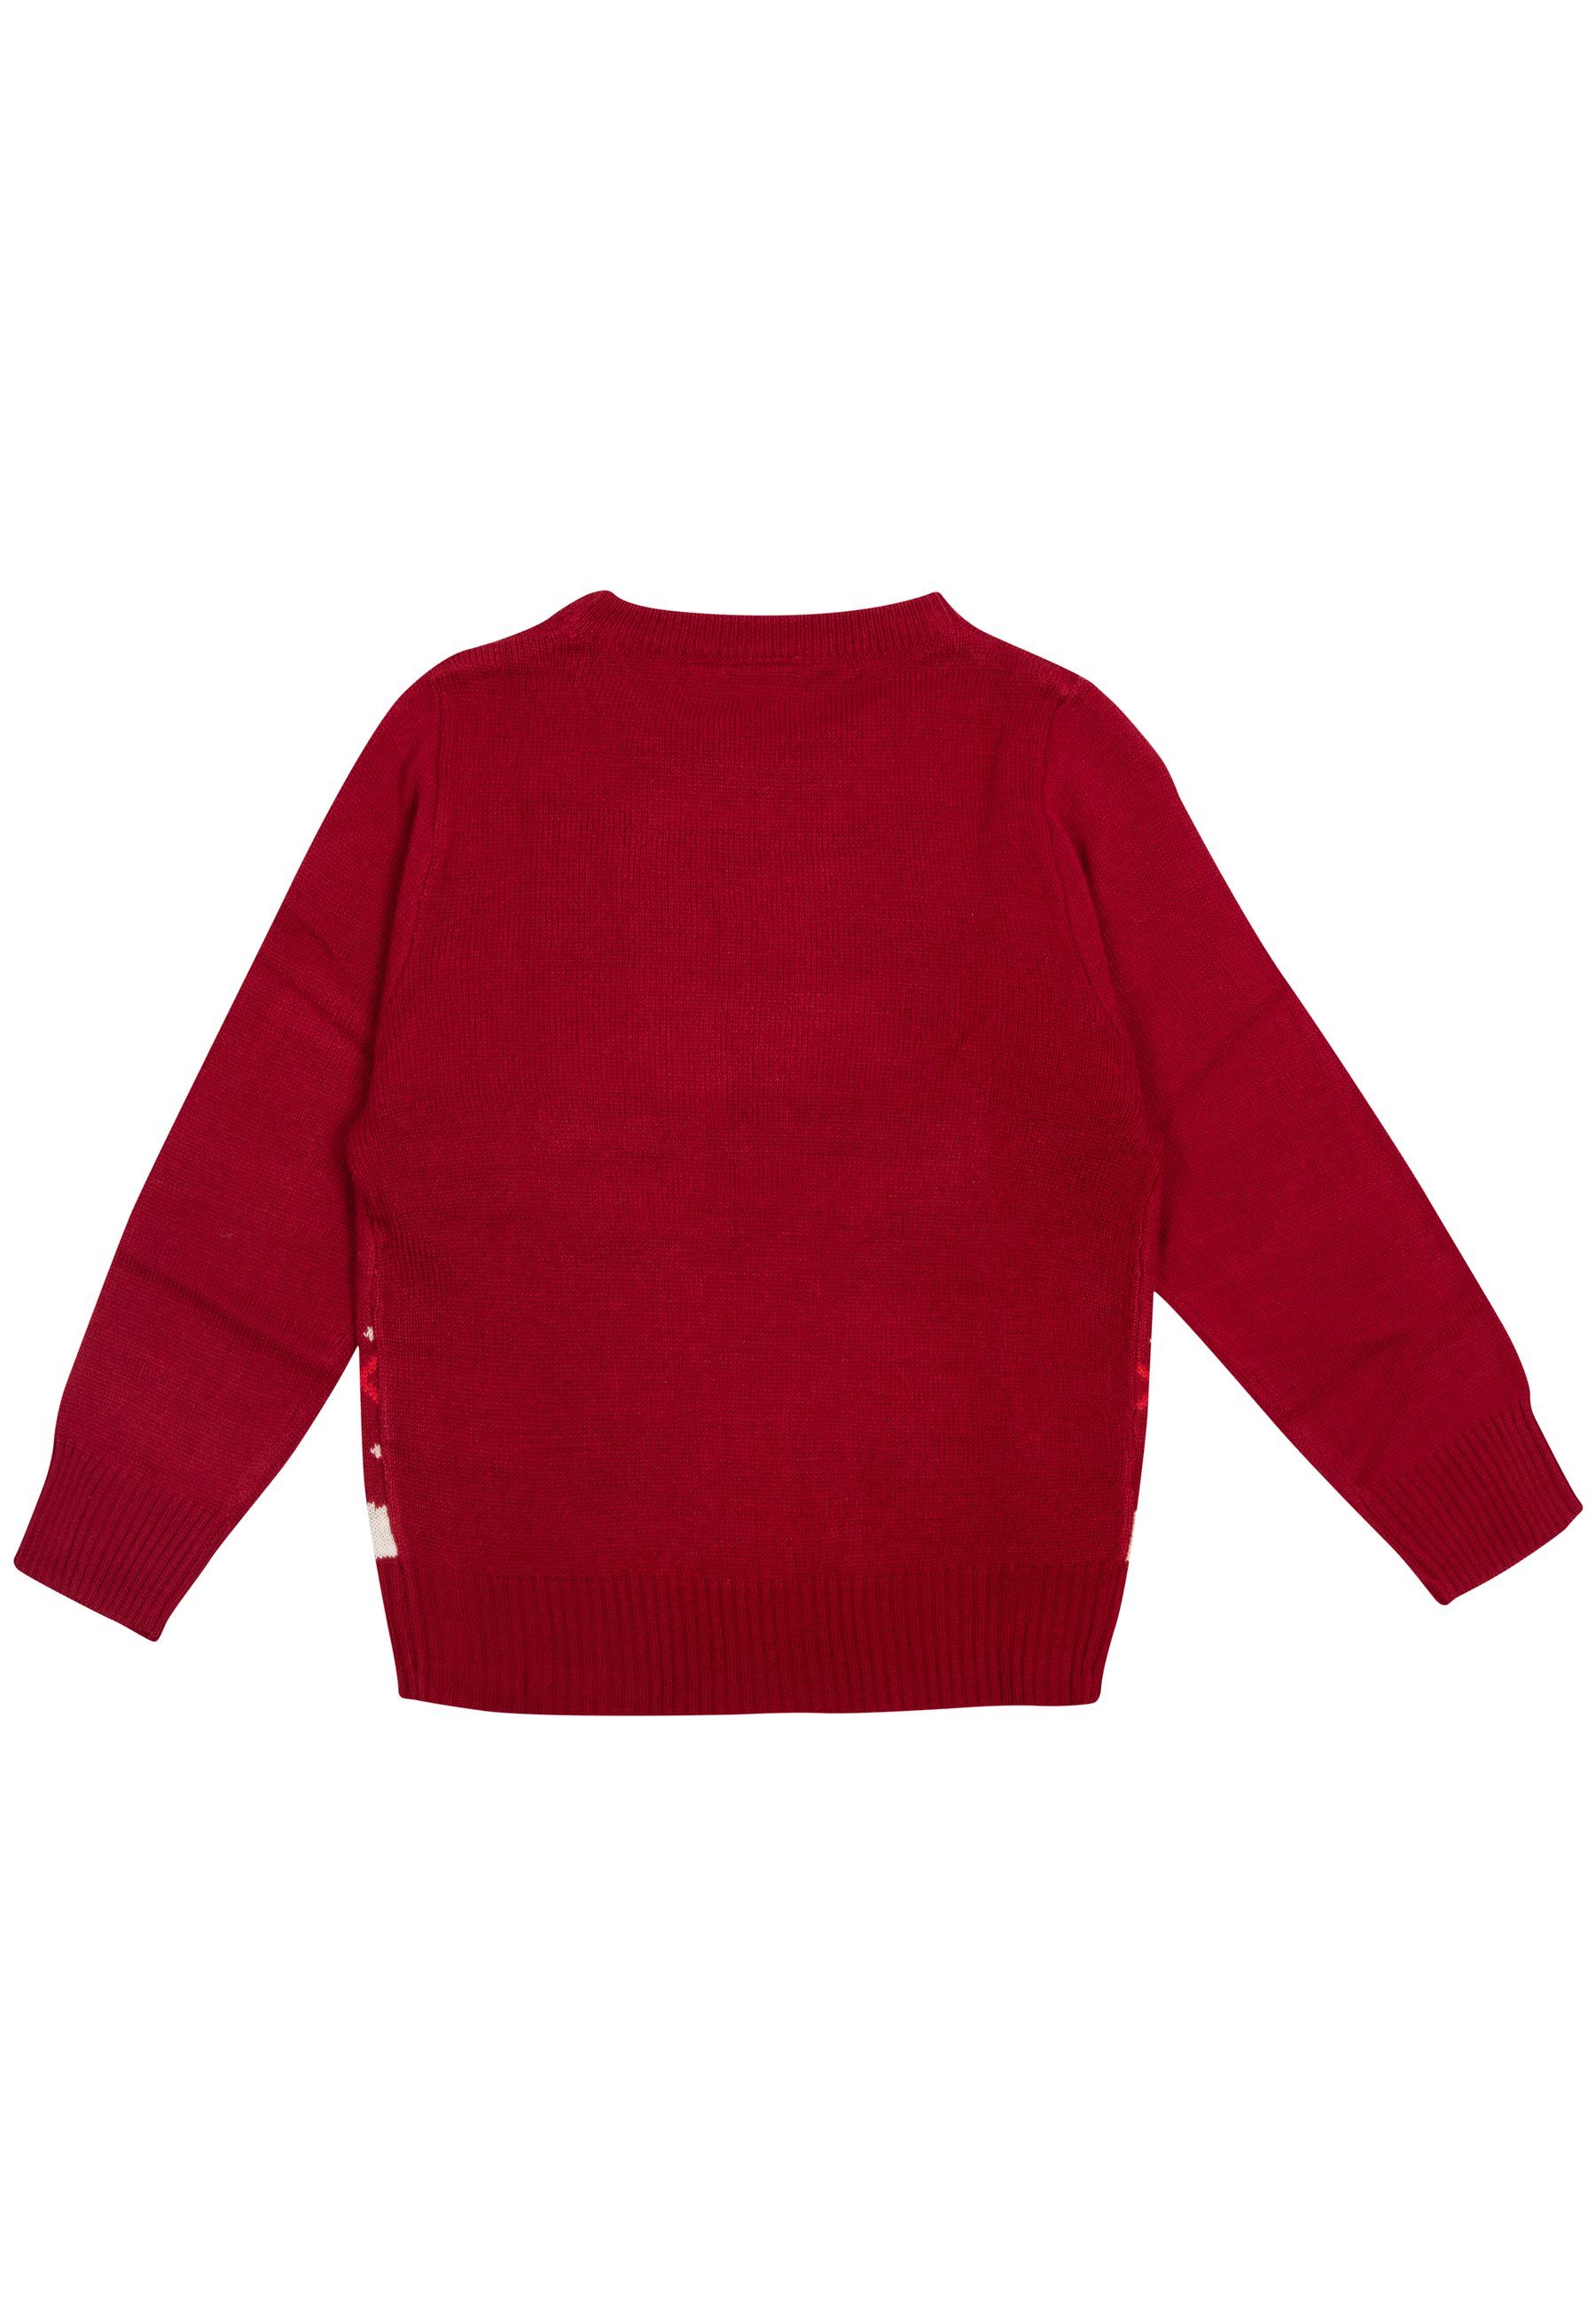 Rot Weihnachtspullover United Weihnachtspullover Sweater Christmas Kinder für - Labels® Ugly Rentiere